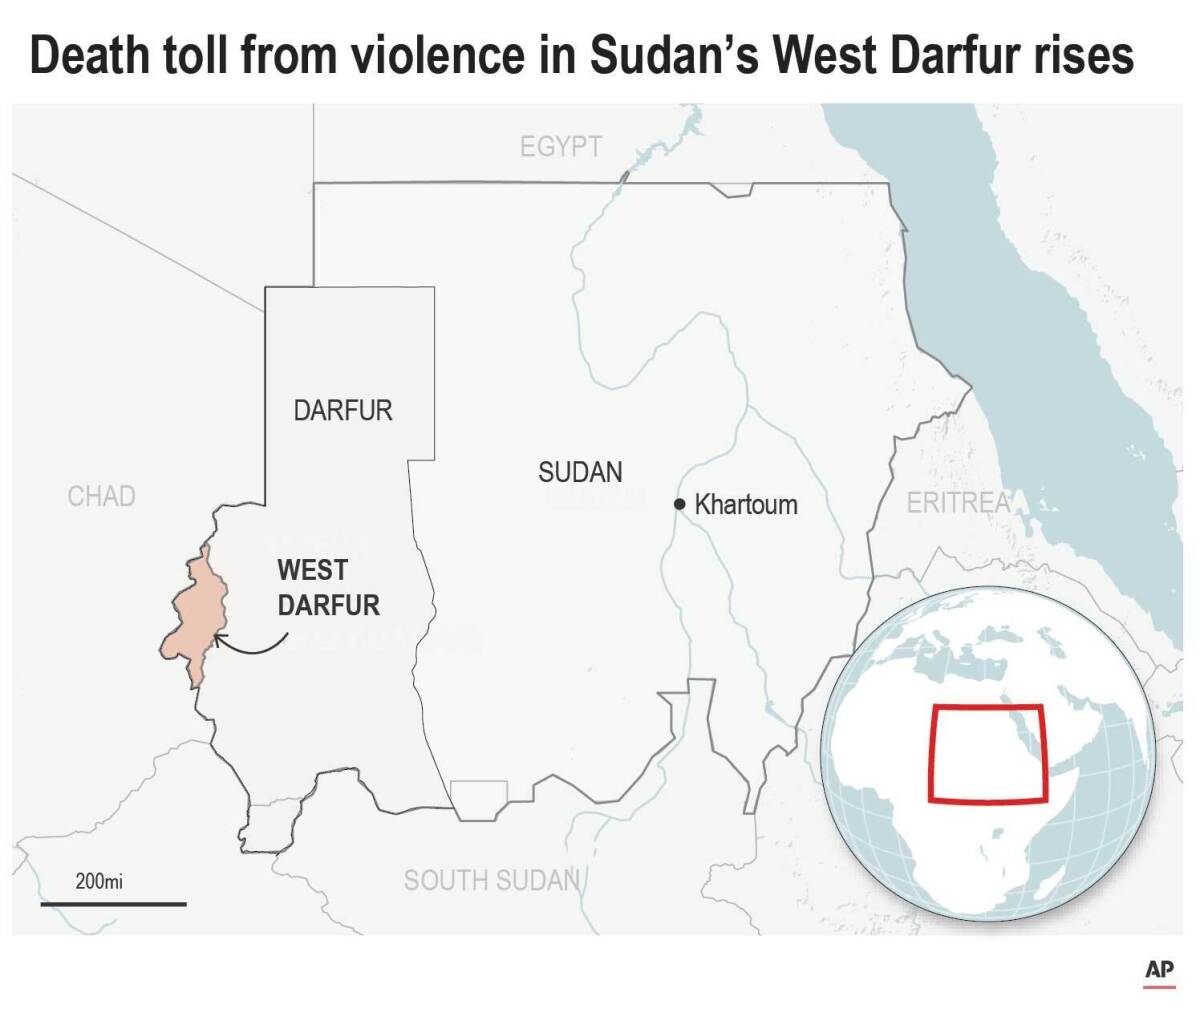 A map showing West Darfur, Sudan